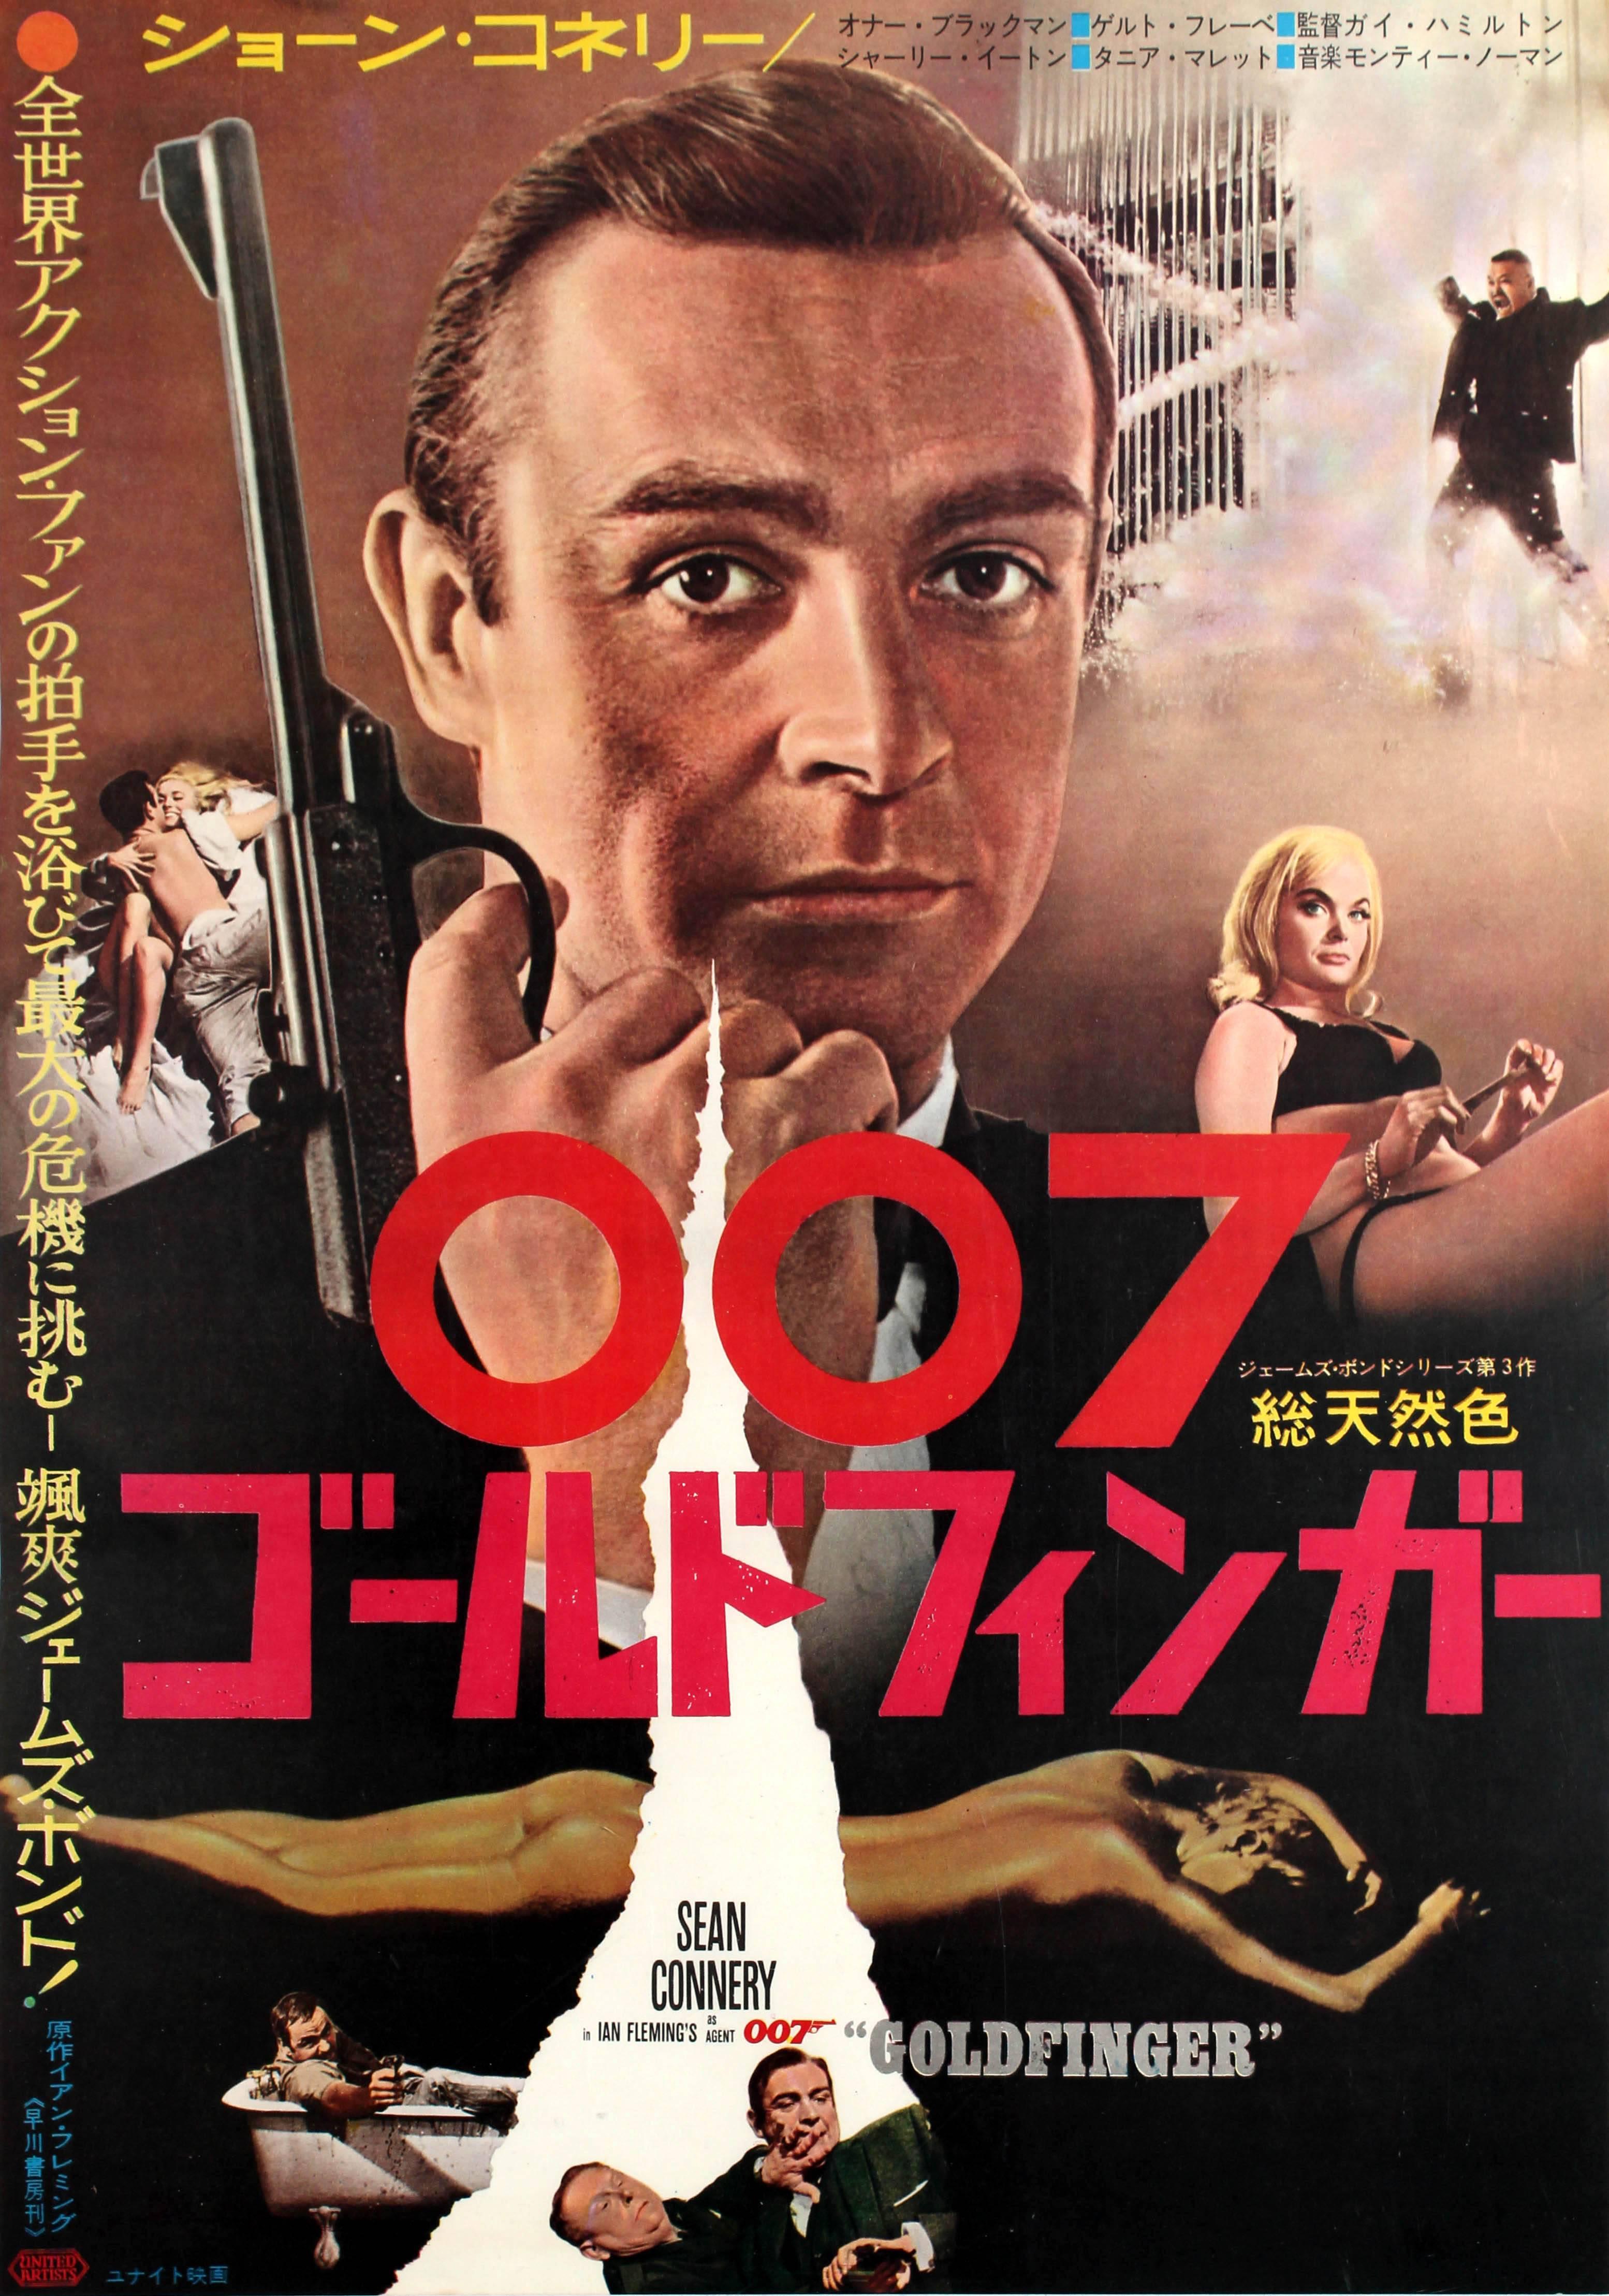 Unknown Print - Original Vintage Japanese Release James Bond Movie Poster For 007 - Goldfinger